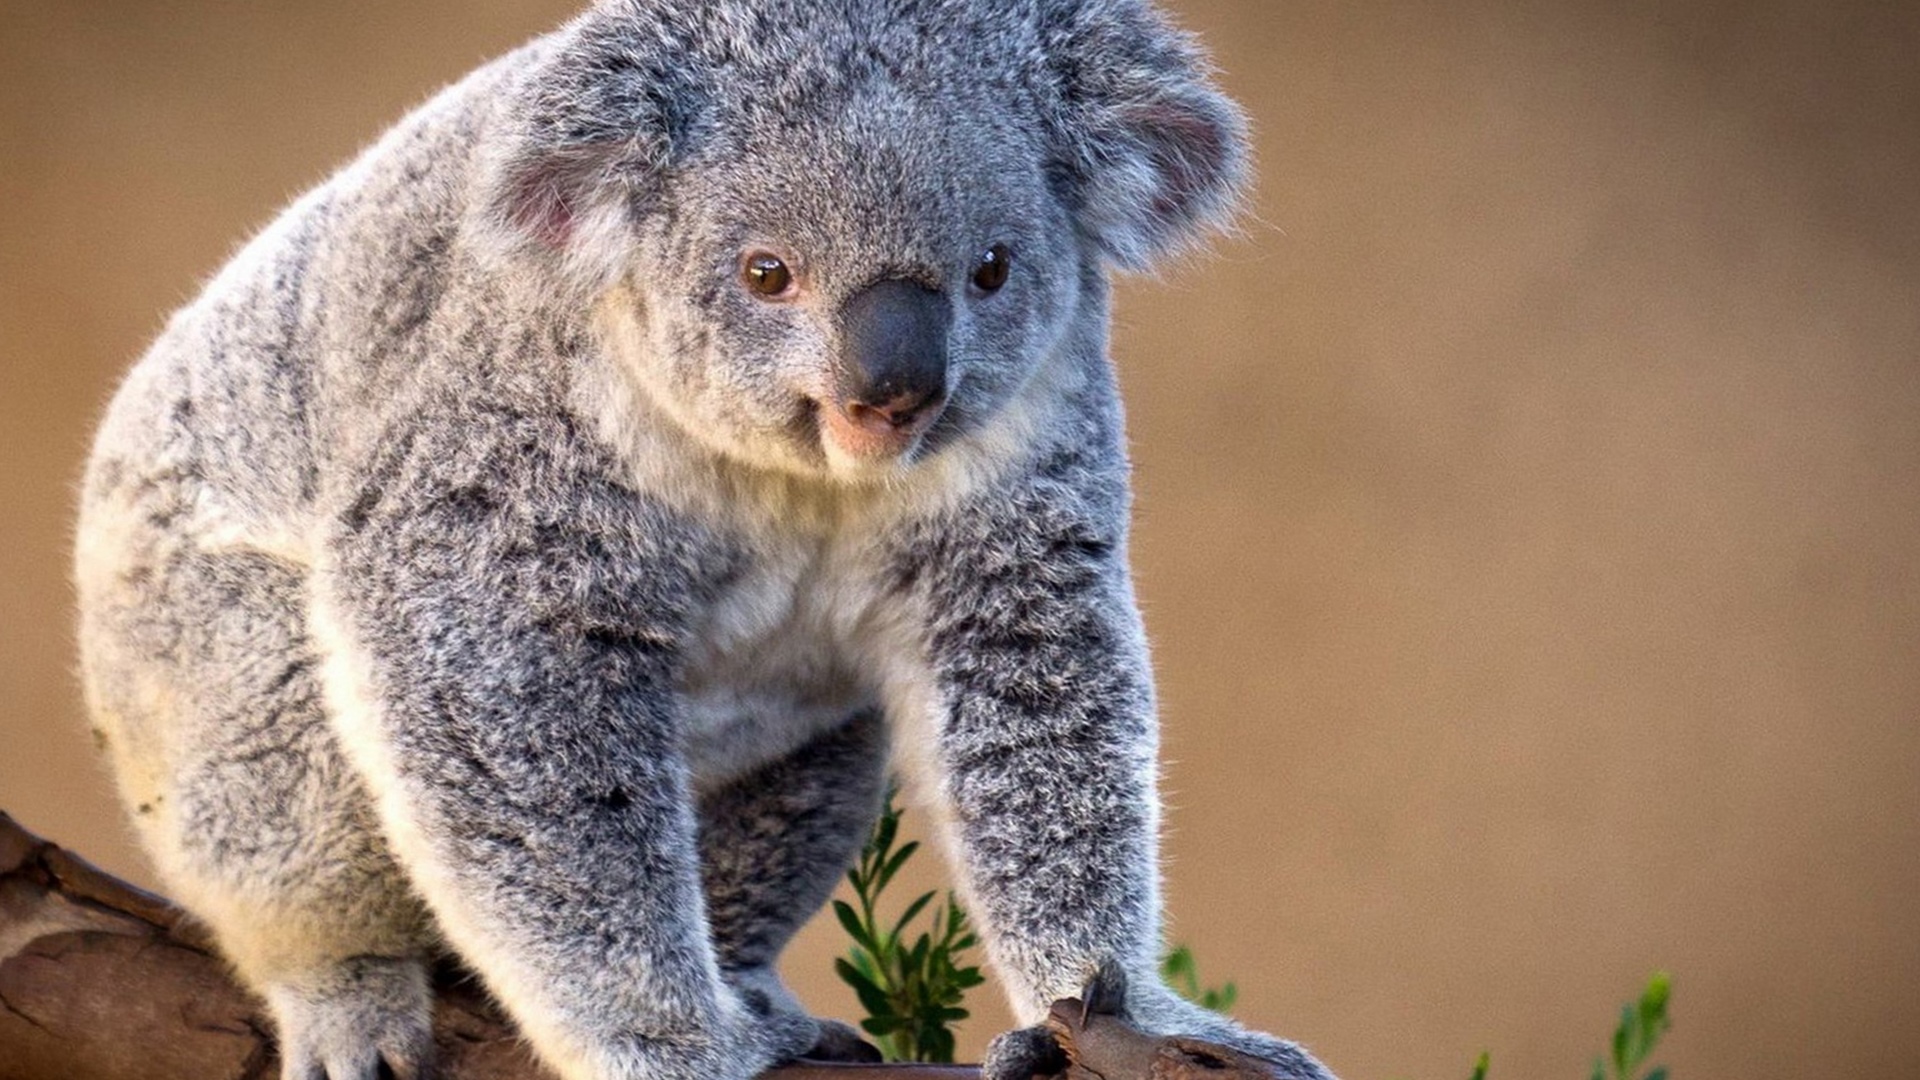 Koala Bear Cute Photos HD Wallpaper Image Pictures